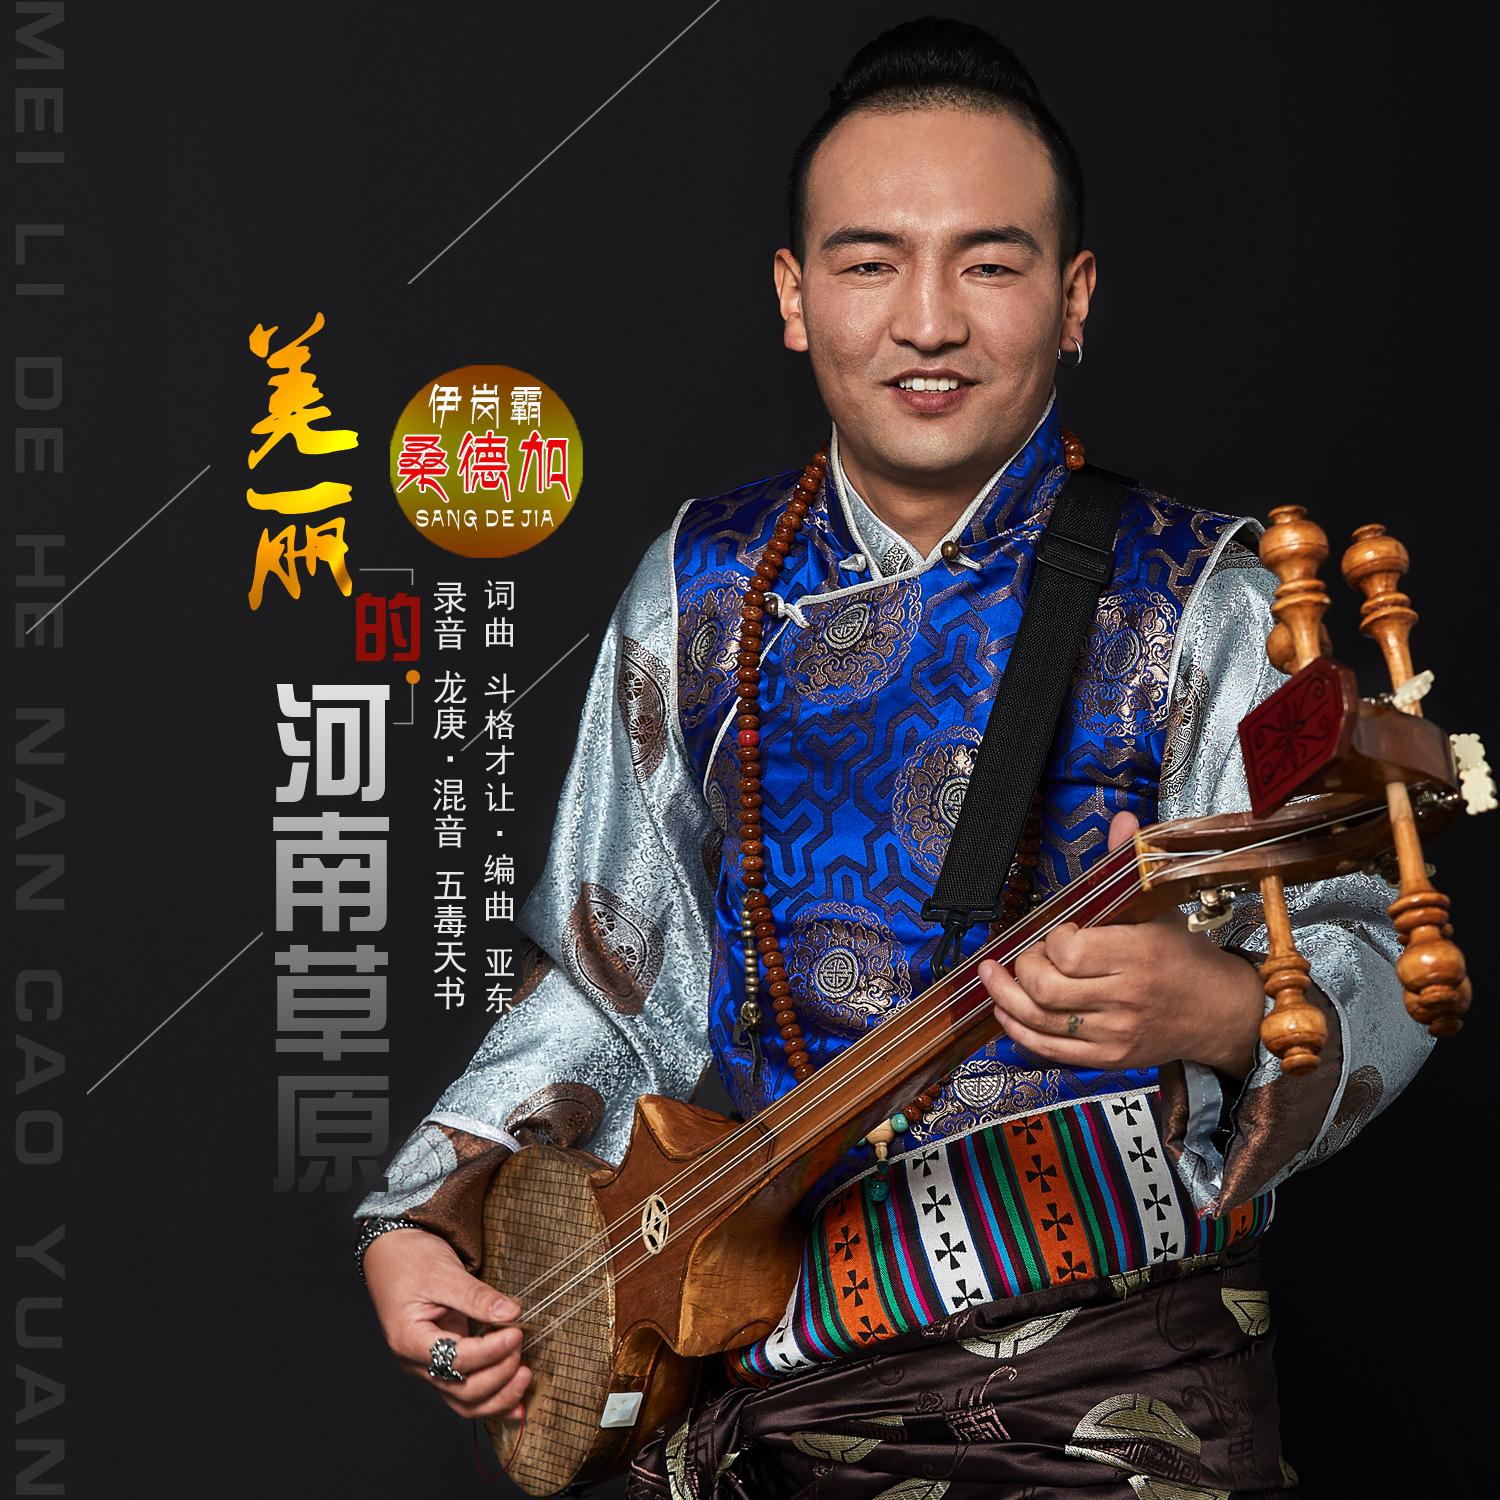 Tibetan Music World 藏族音乐世界 བོད་ཀྱི་རོལ་དབྱངས་གླིང་།: 2021 Tibetan New Year Recording